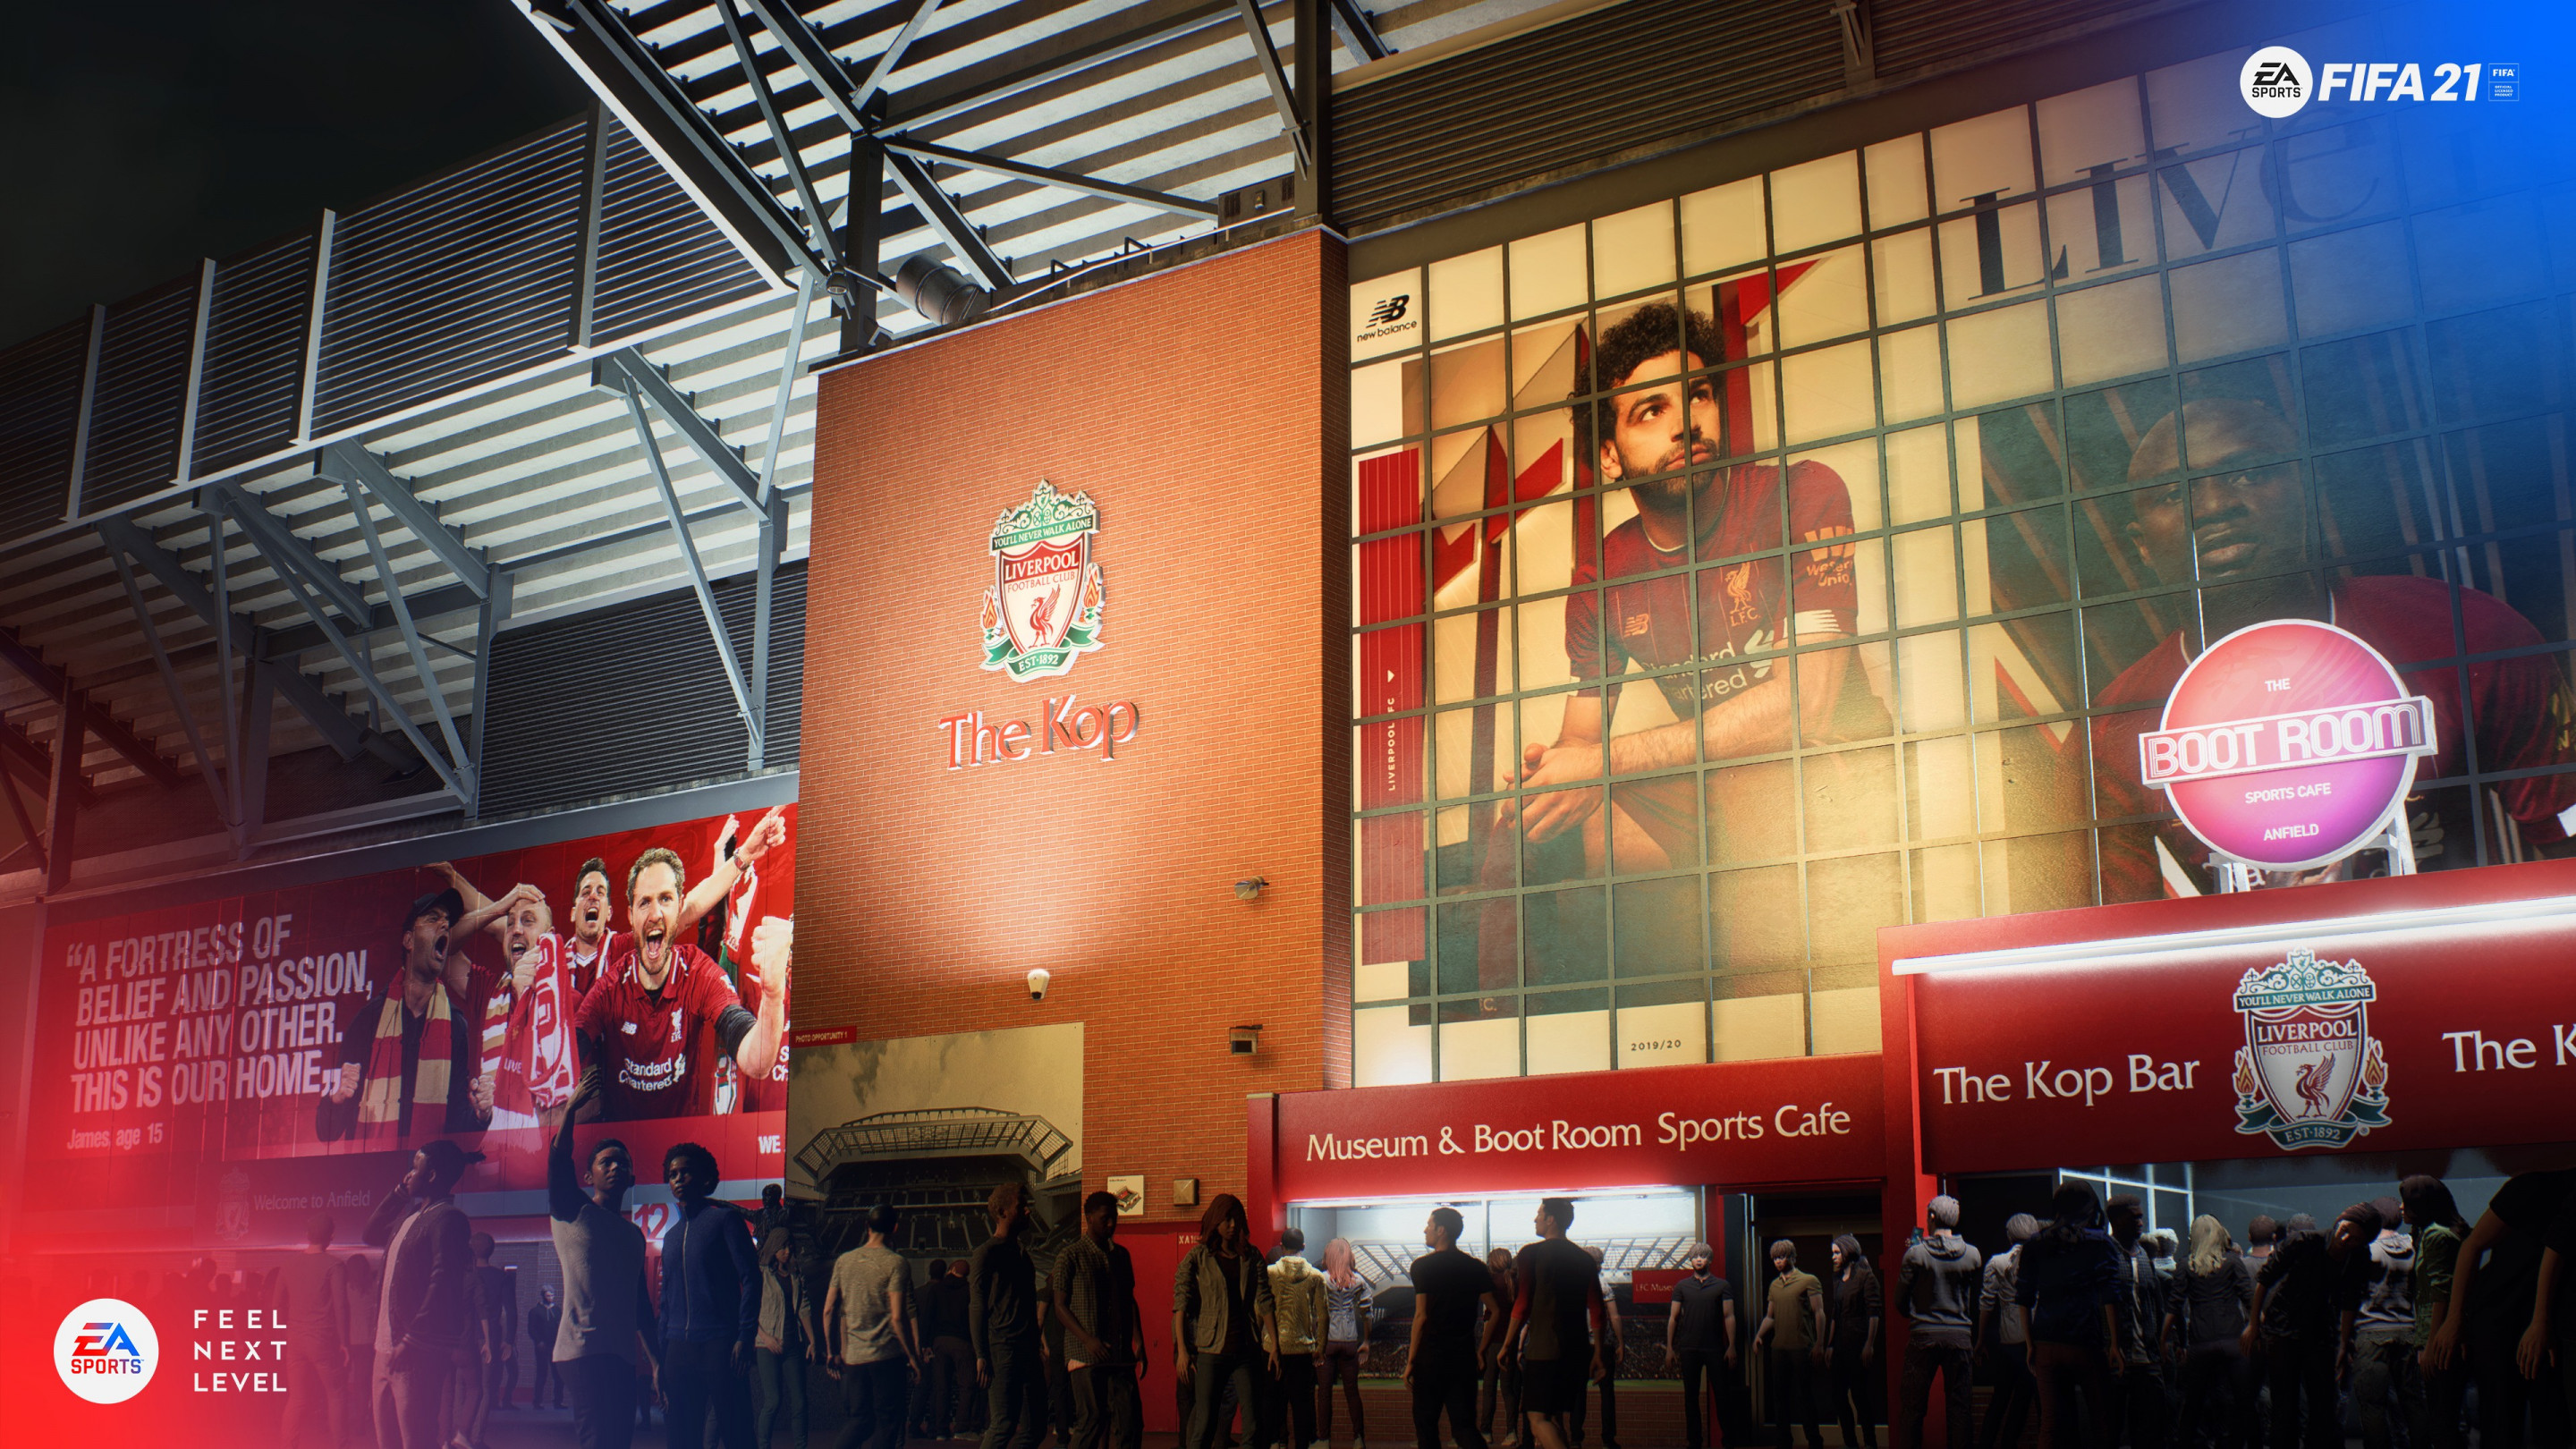 FIFA 21 Liverpool Stadium wallpaper 2880x1620